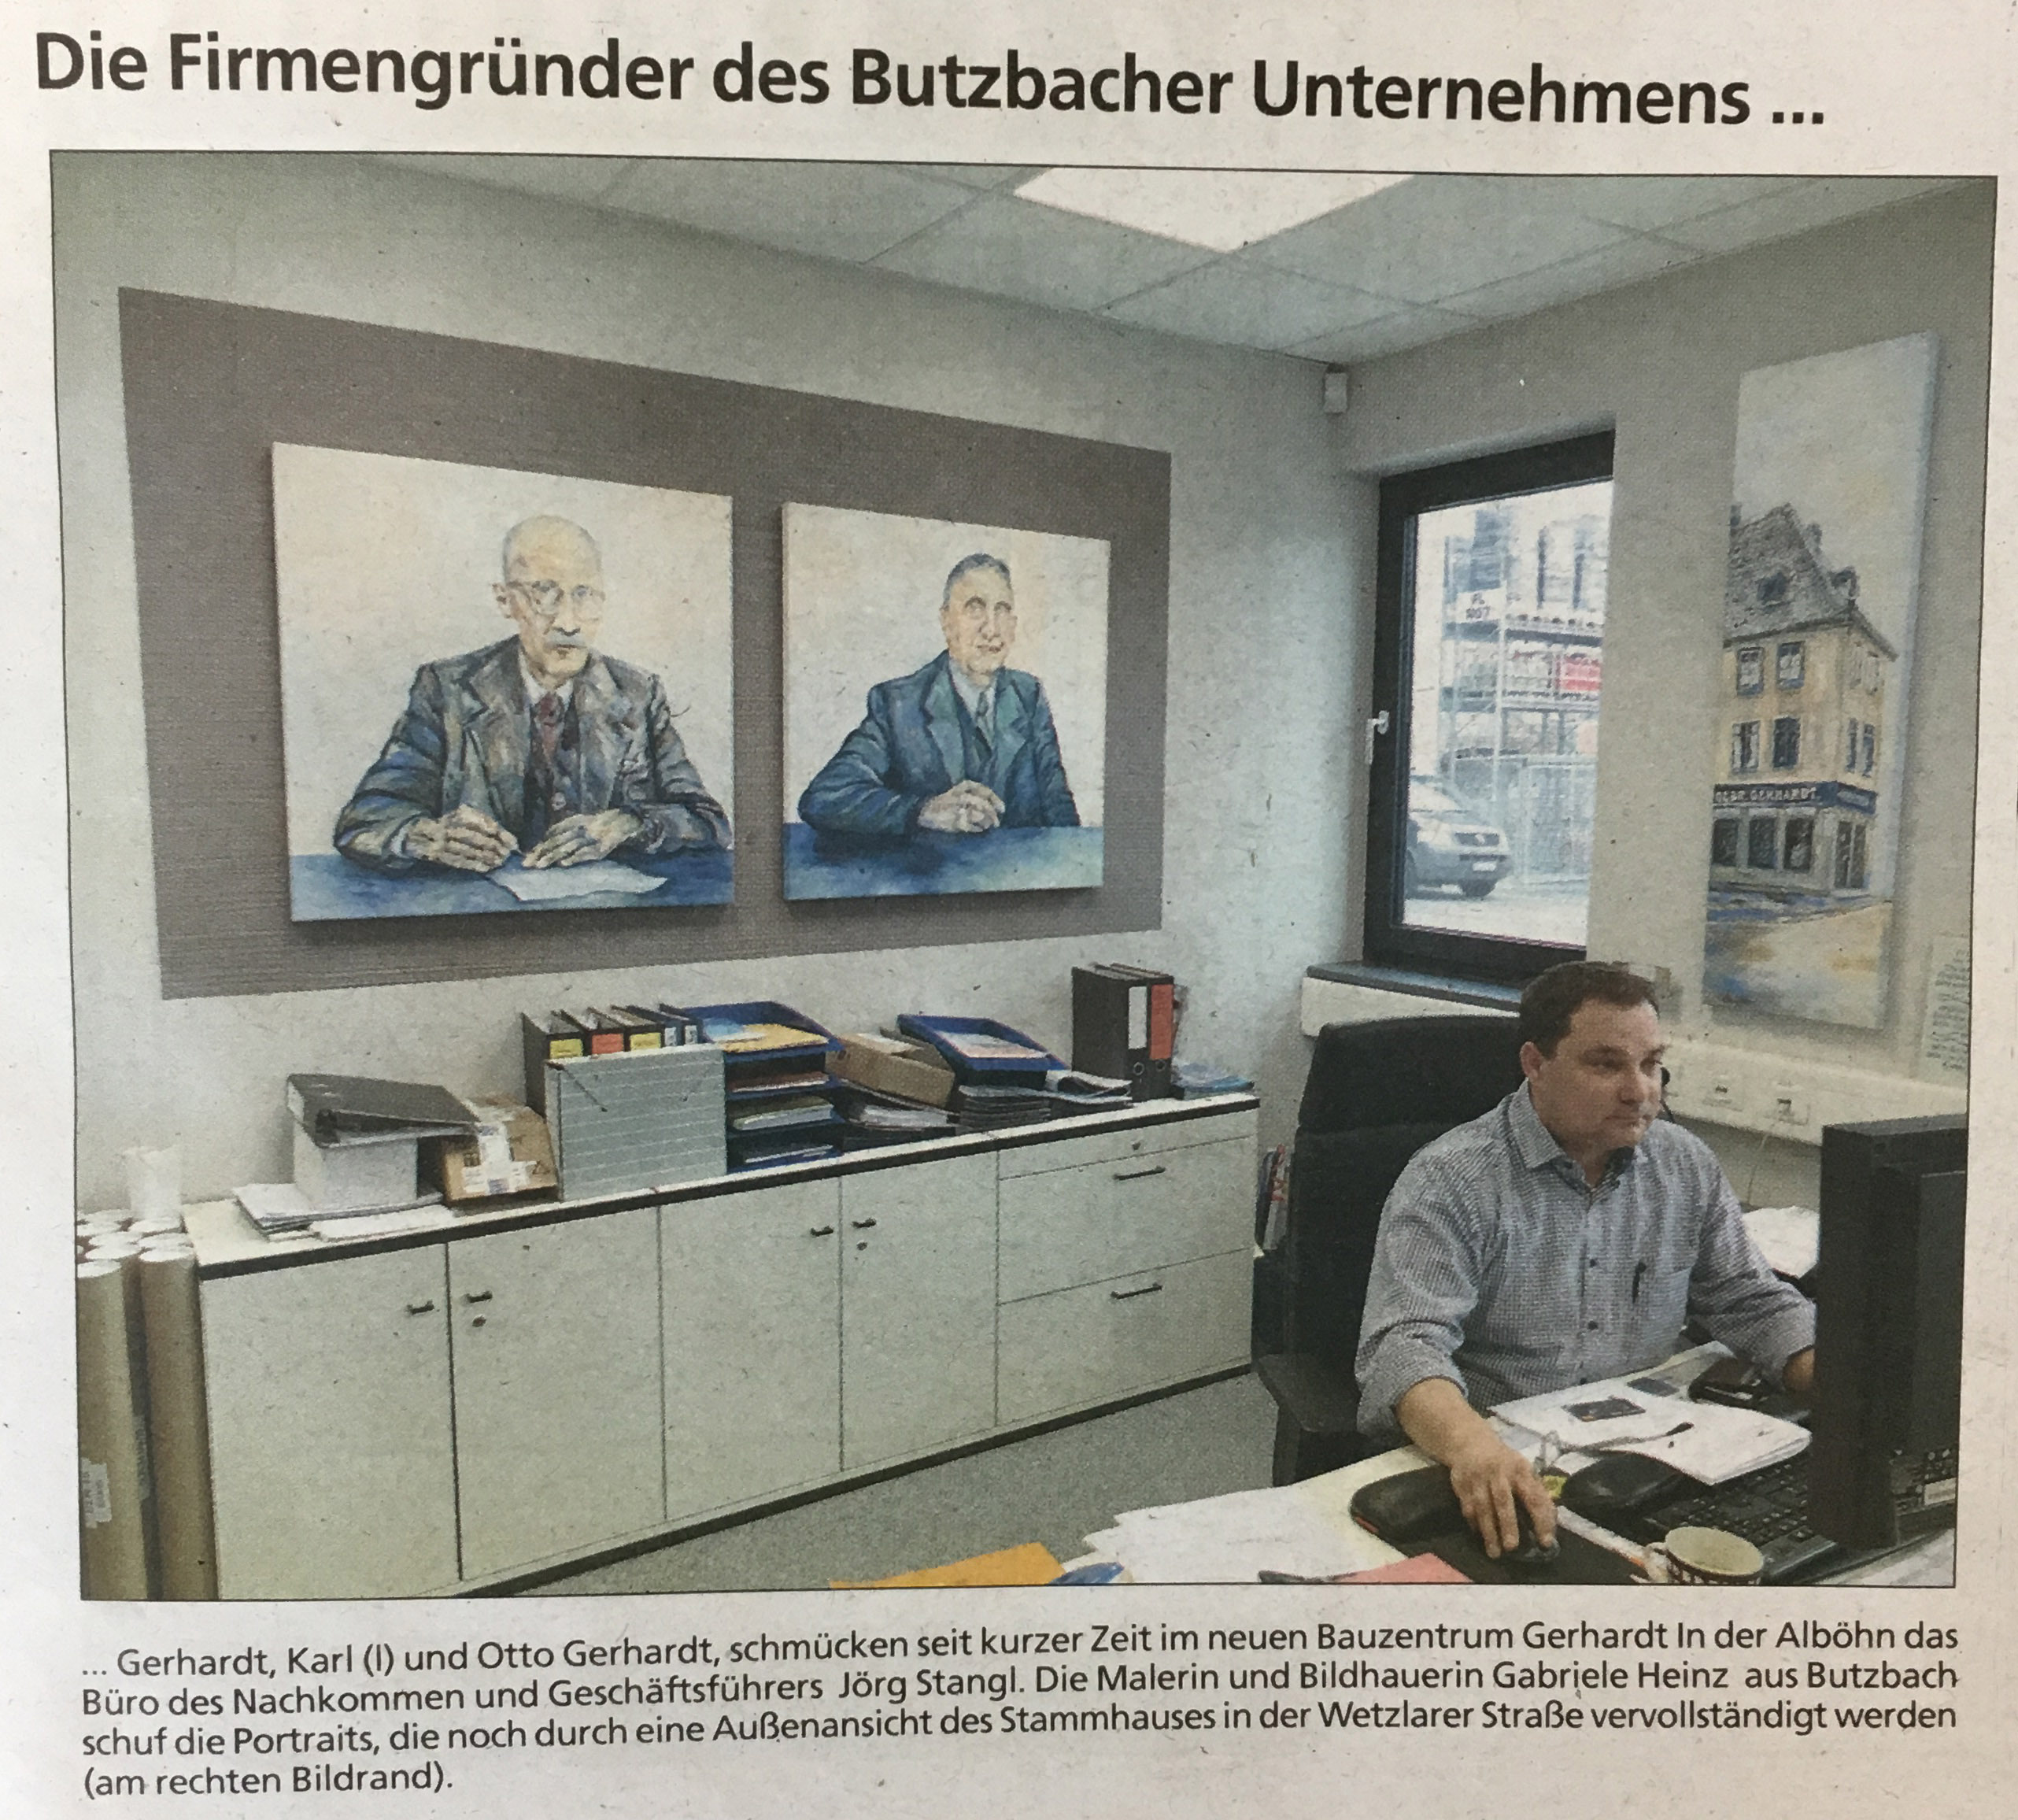 Gabriele Heinz - Butzbacher Zeitung